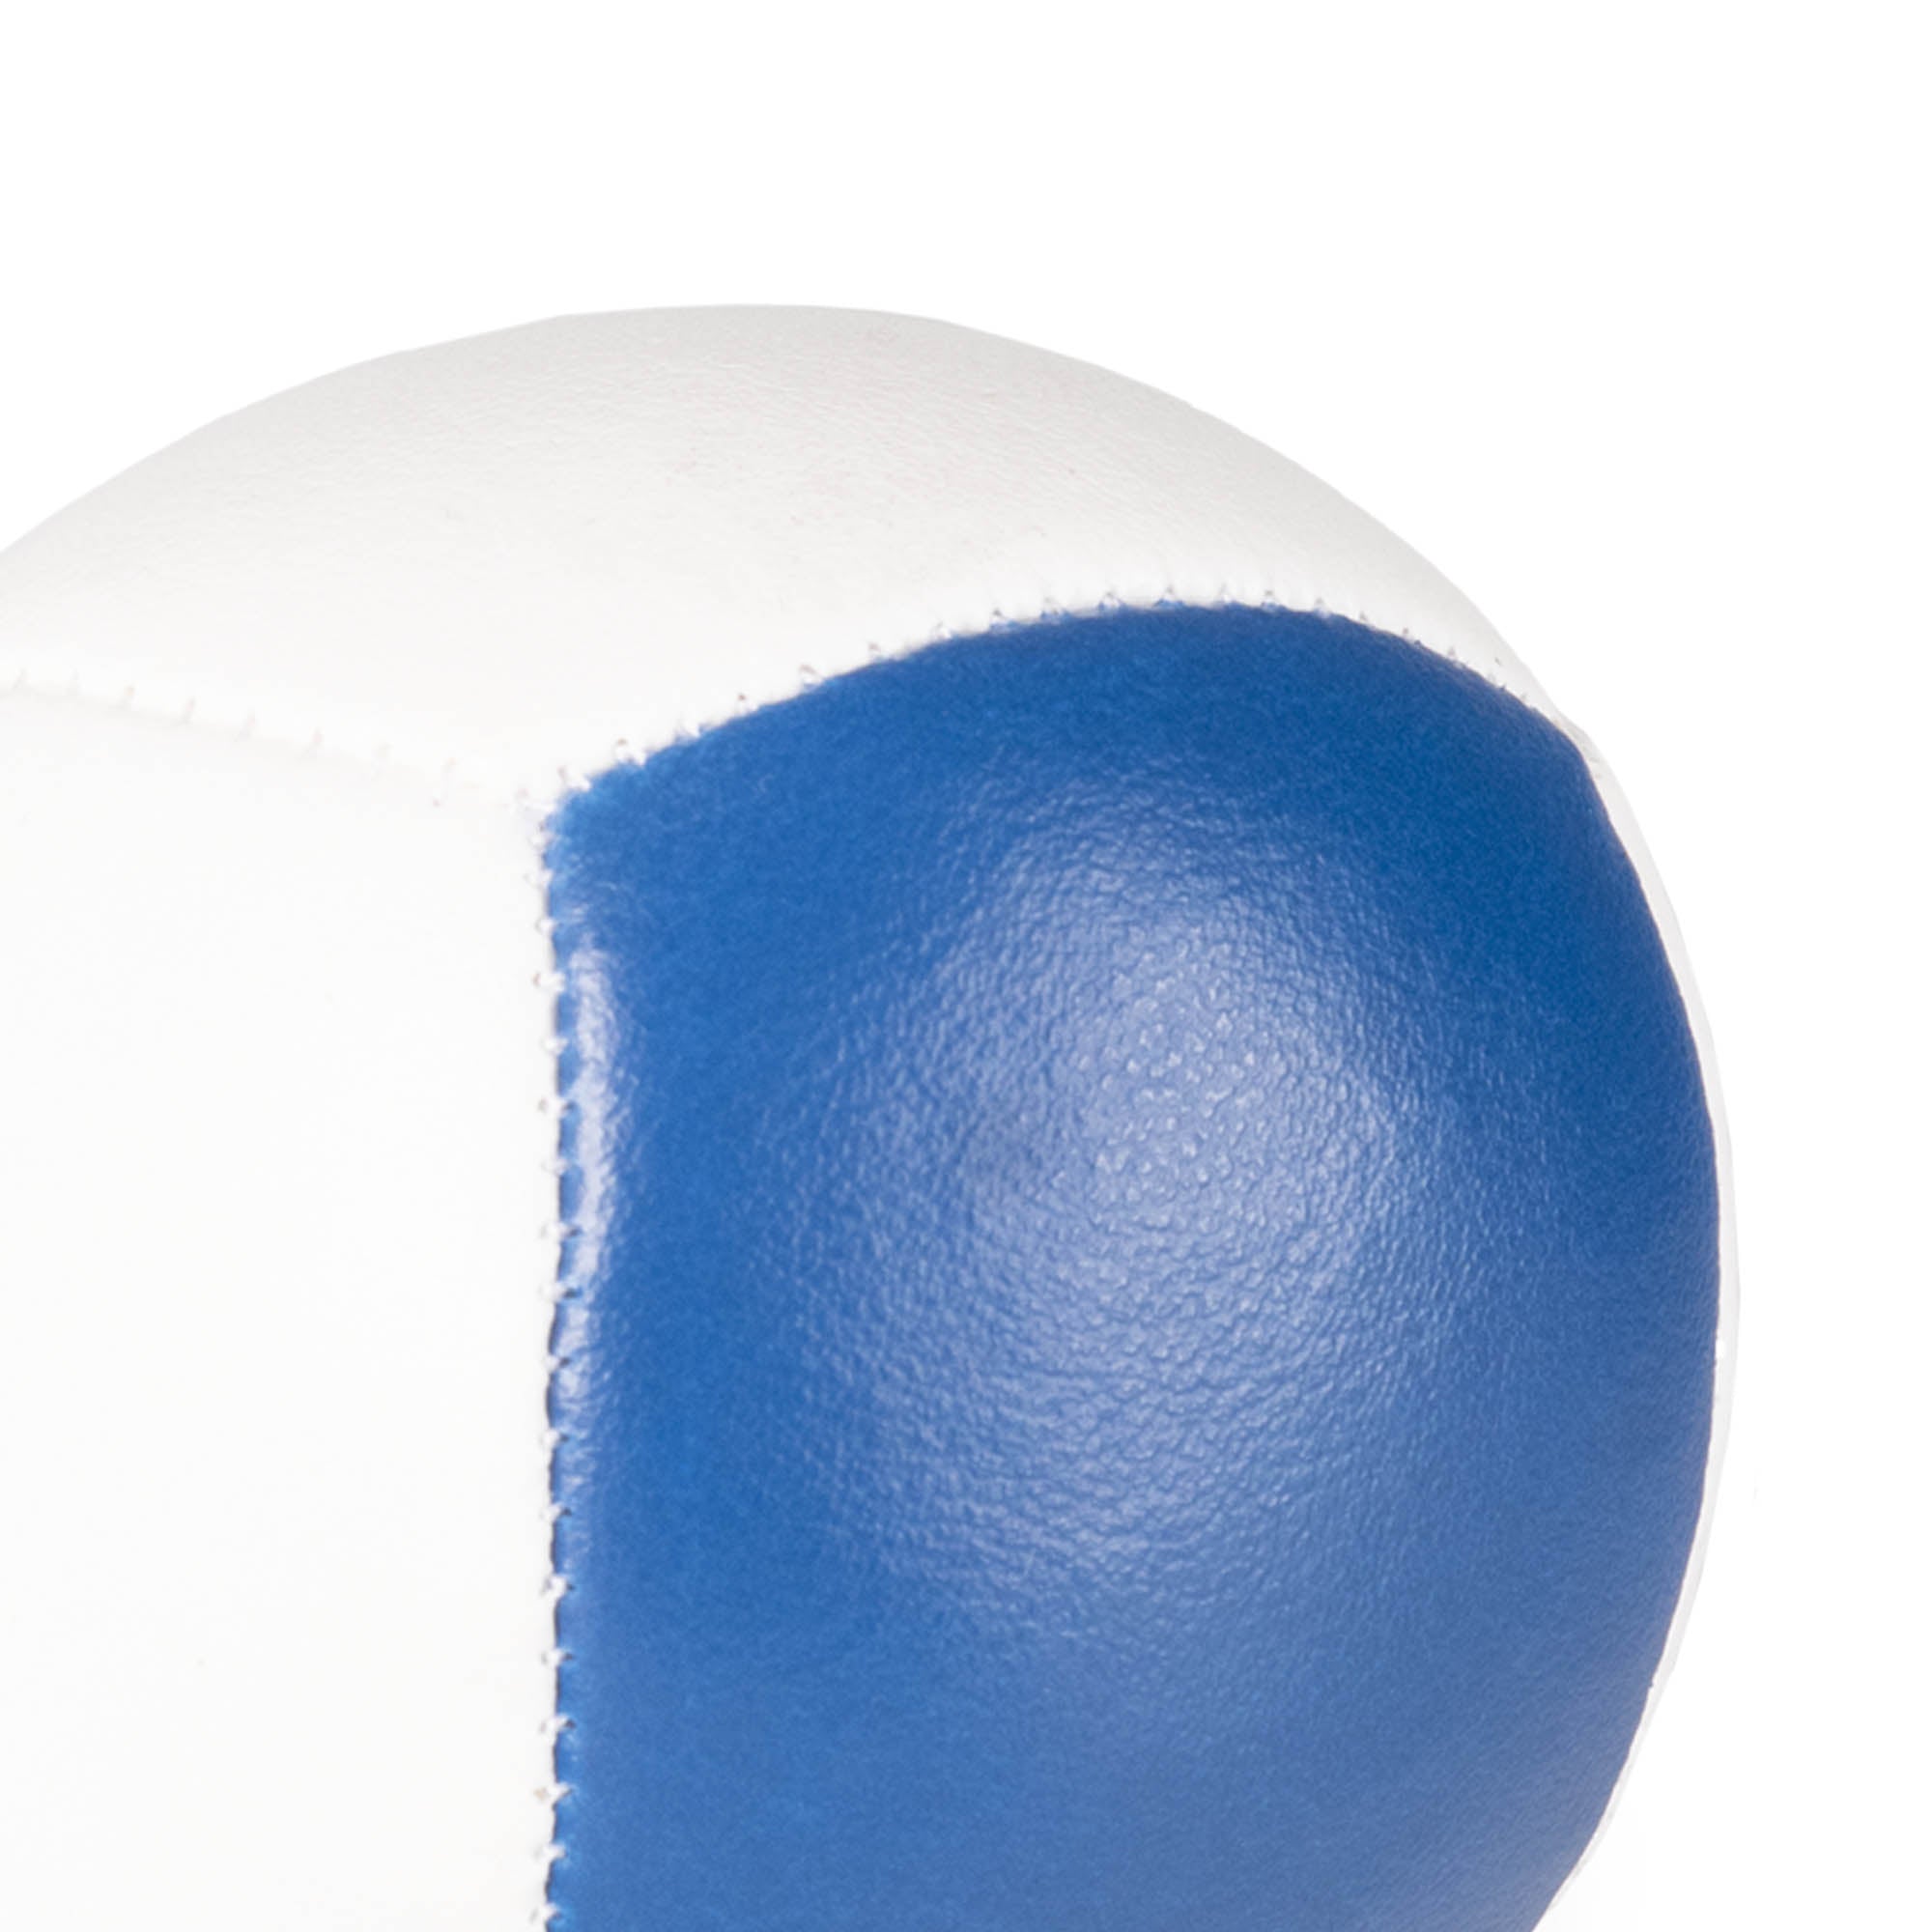 Firetoys 110g thud juggling ball, close up stitching blue/white